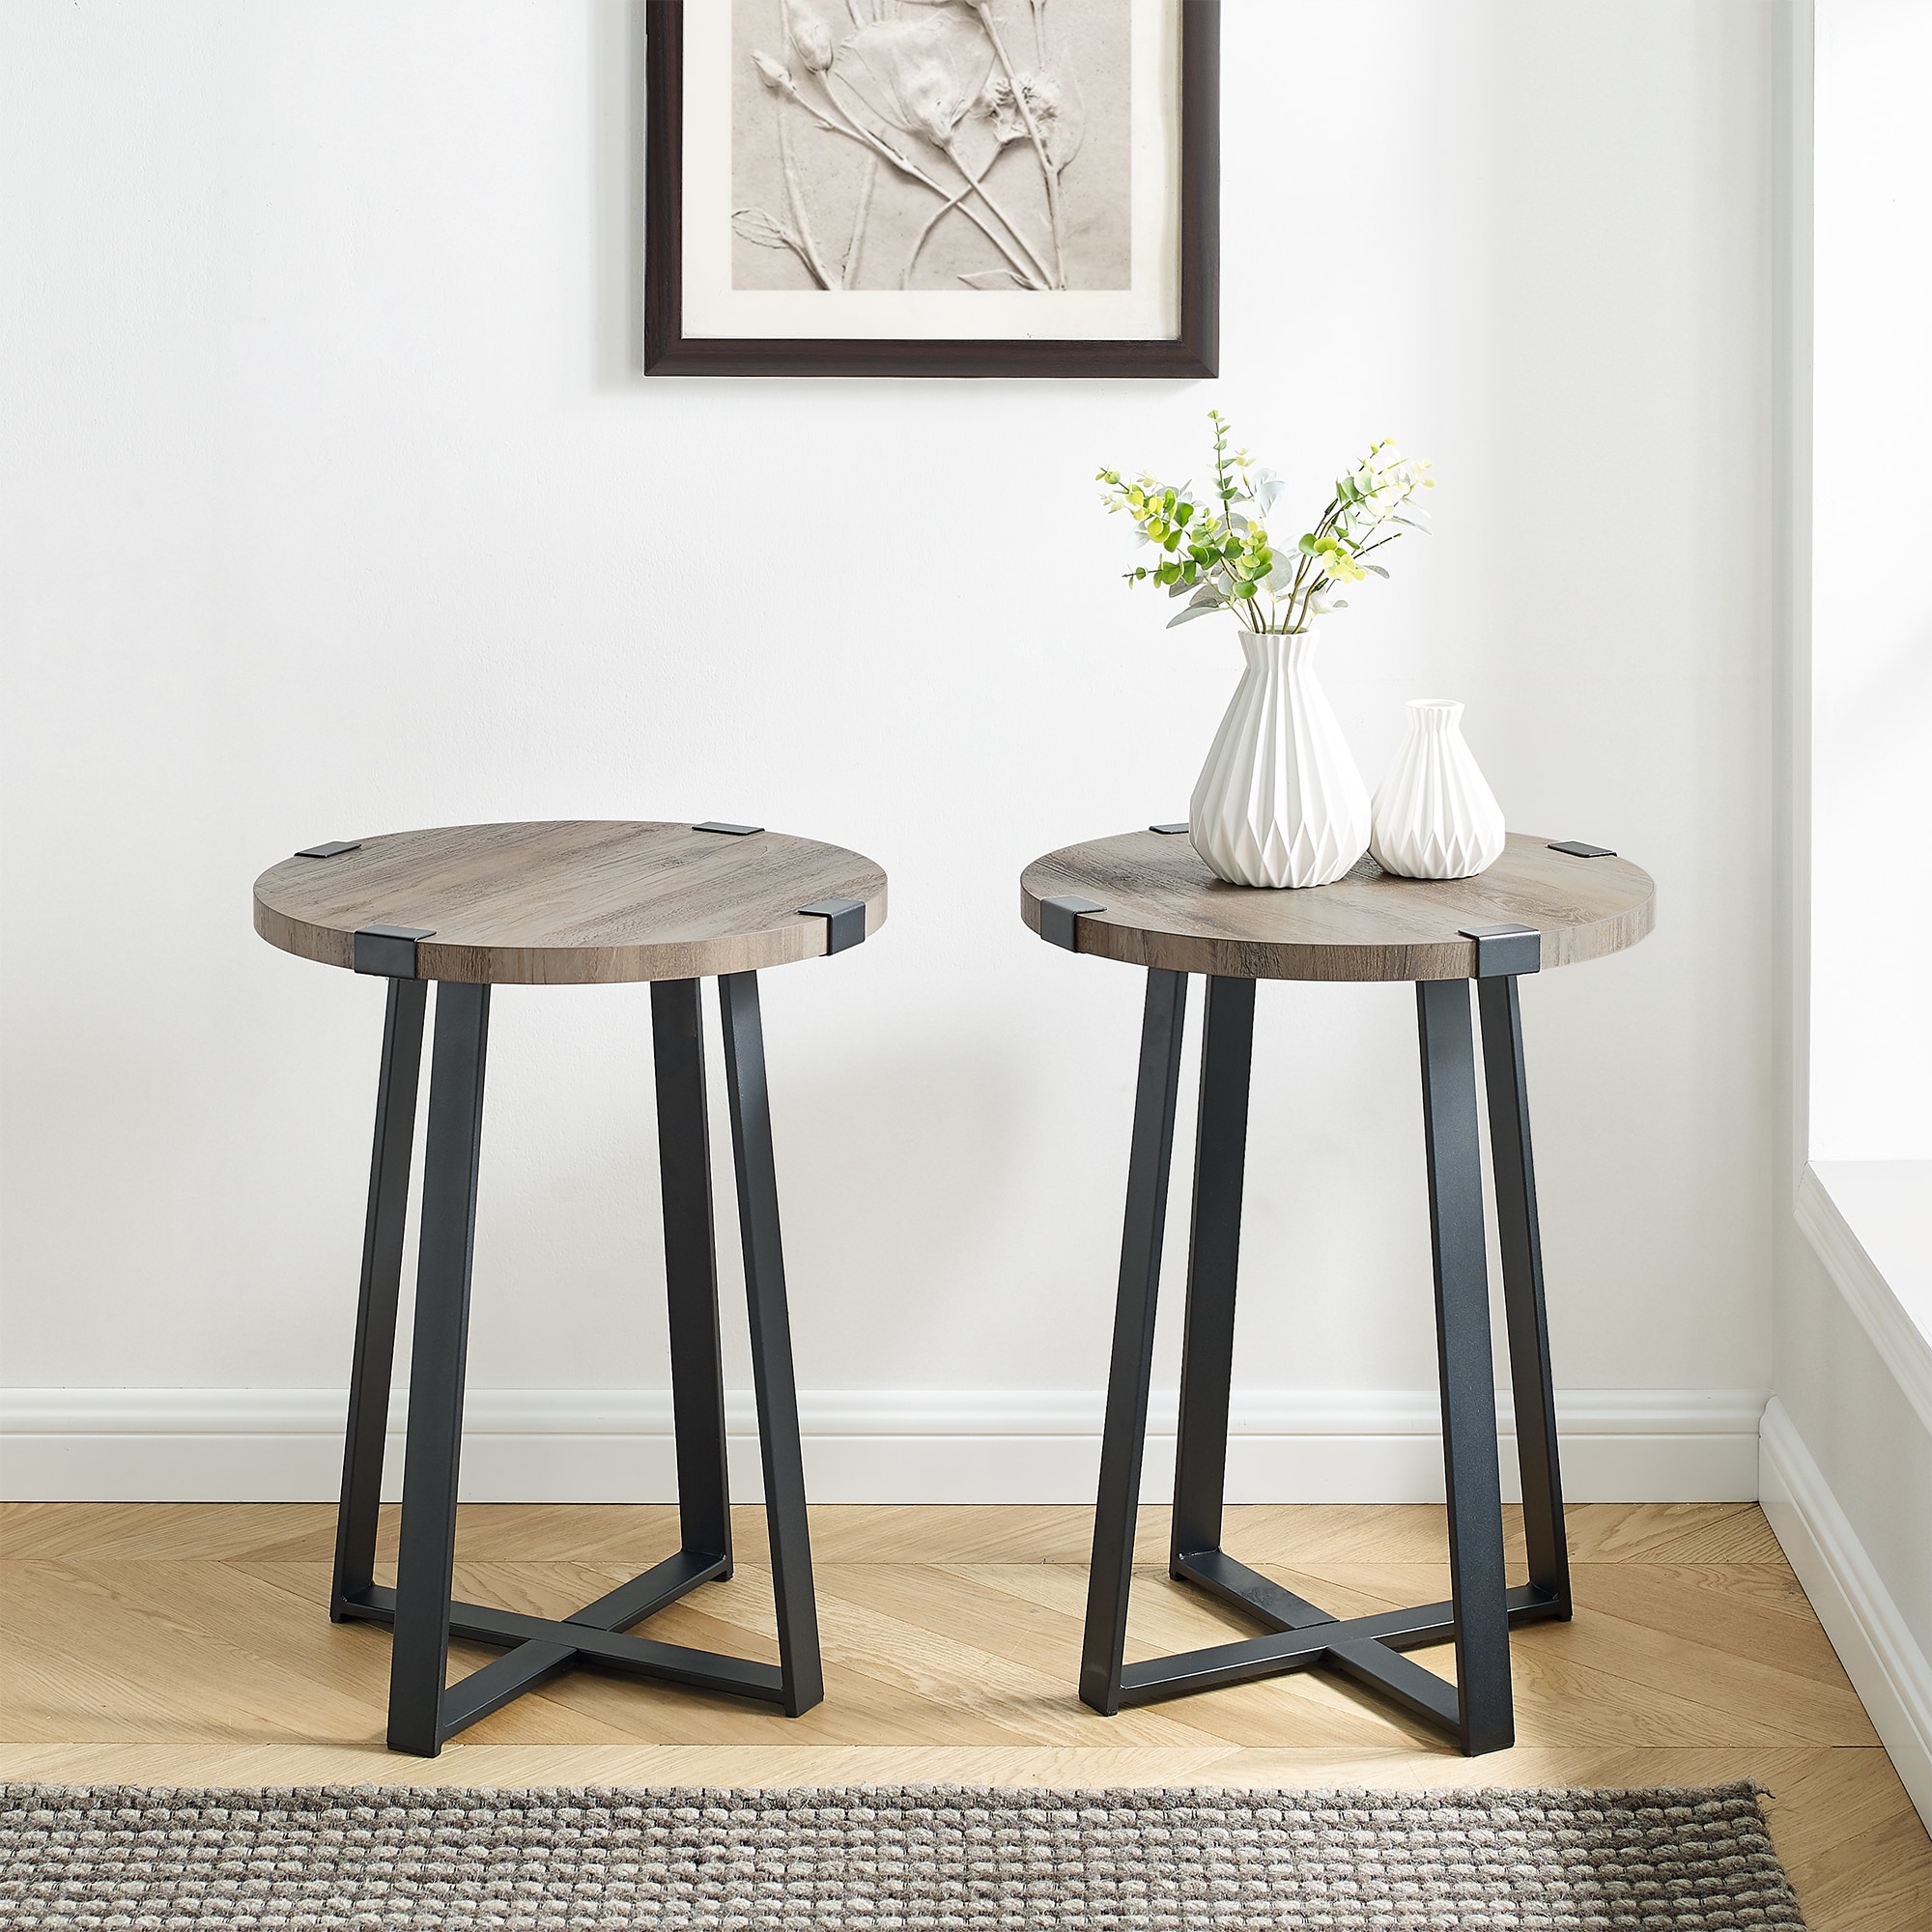 Middlebrook Designs Barnett Round Metal Wrap Side Table - Set of 2